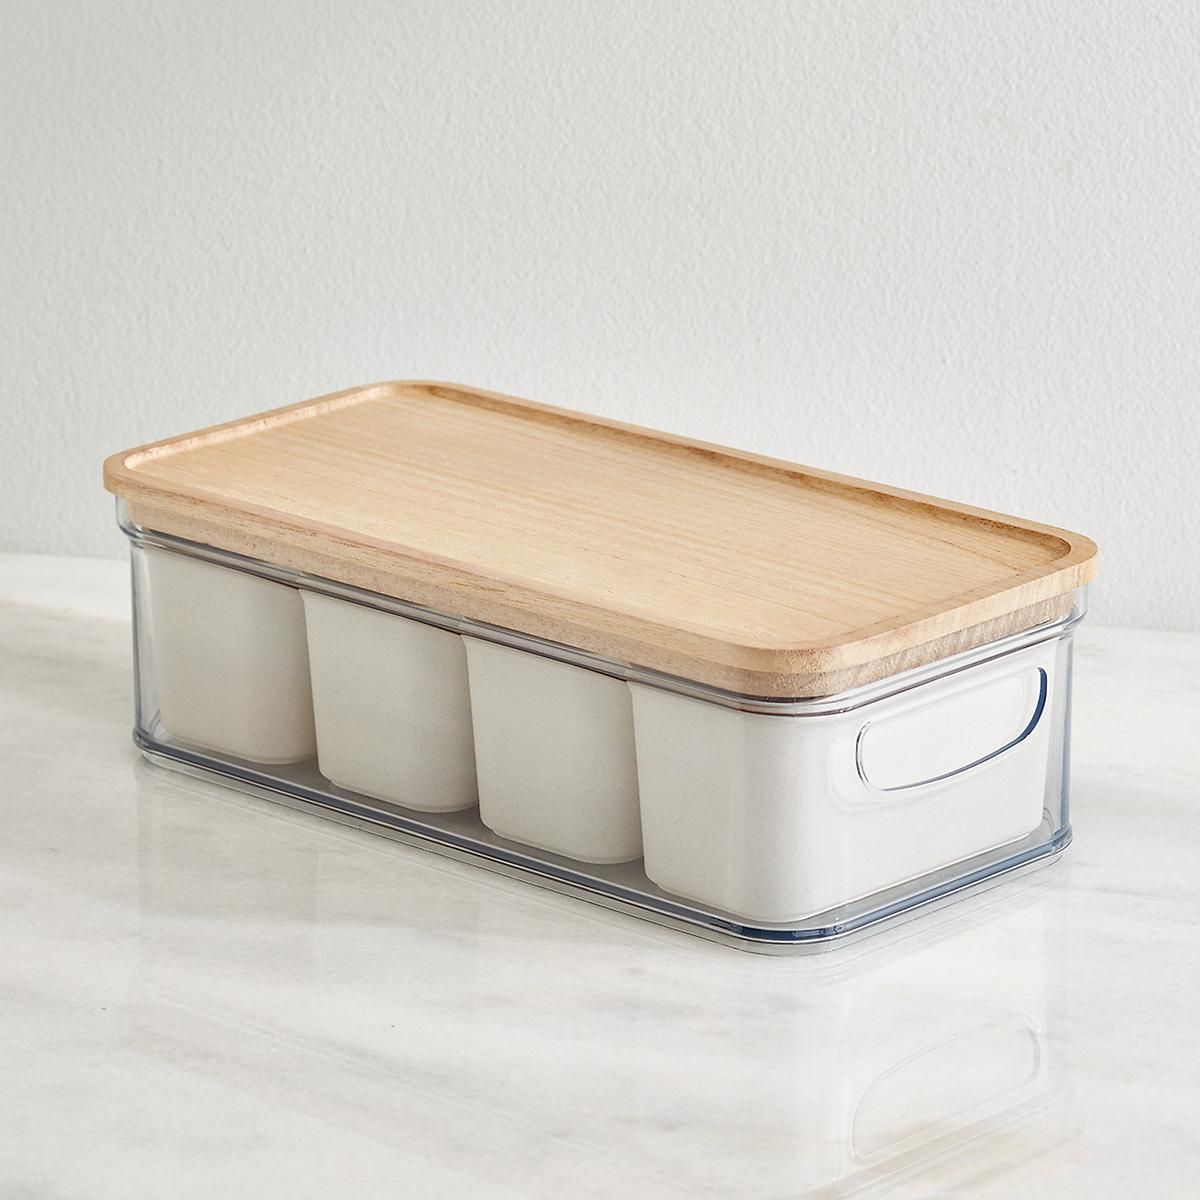 Rosanna Pansino x iDesign Coconut Baking Starter Kit | The Container Store